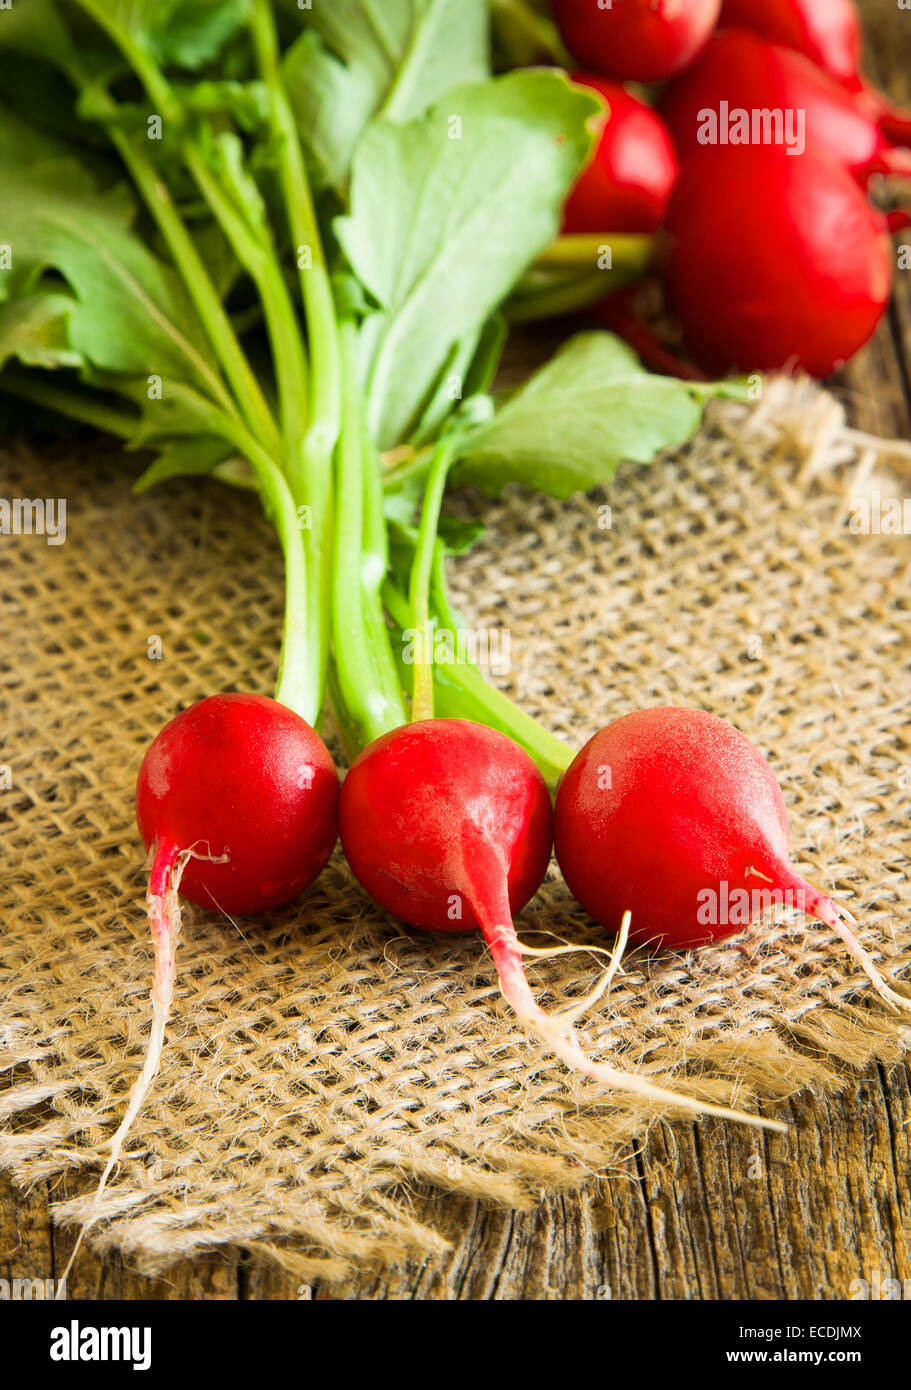 Bunch of fresh radish on wooden table Stock Photo